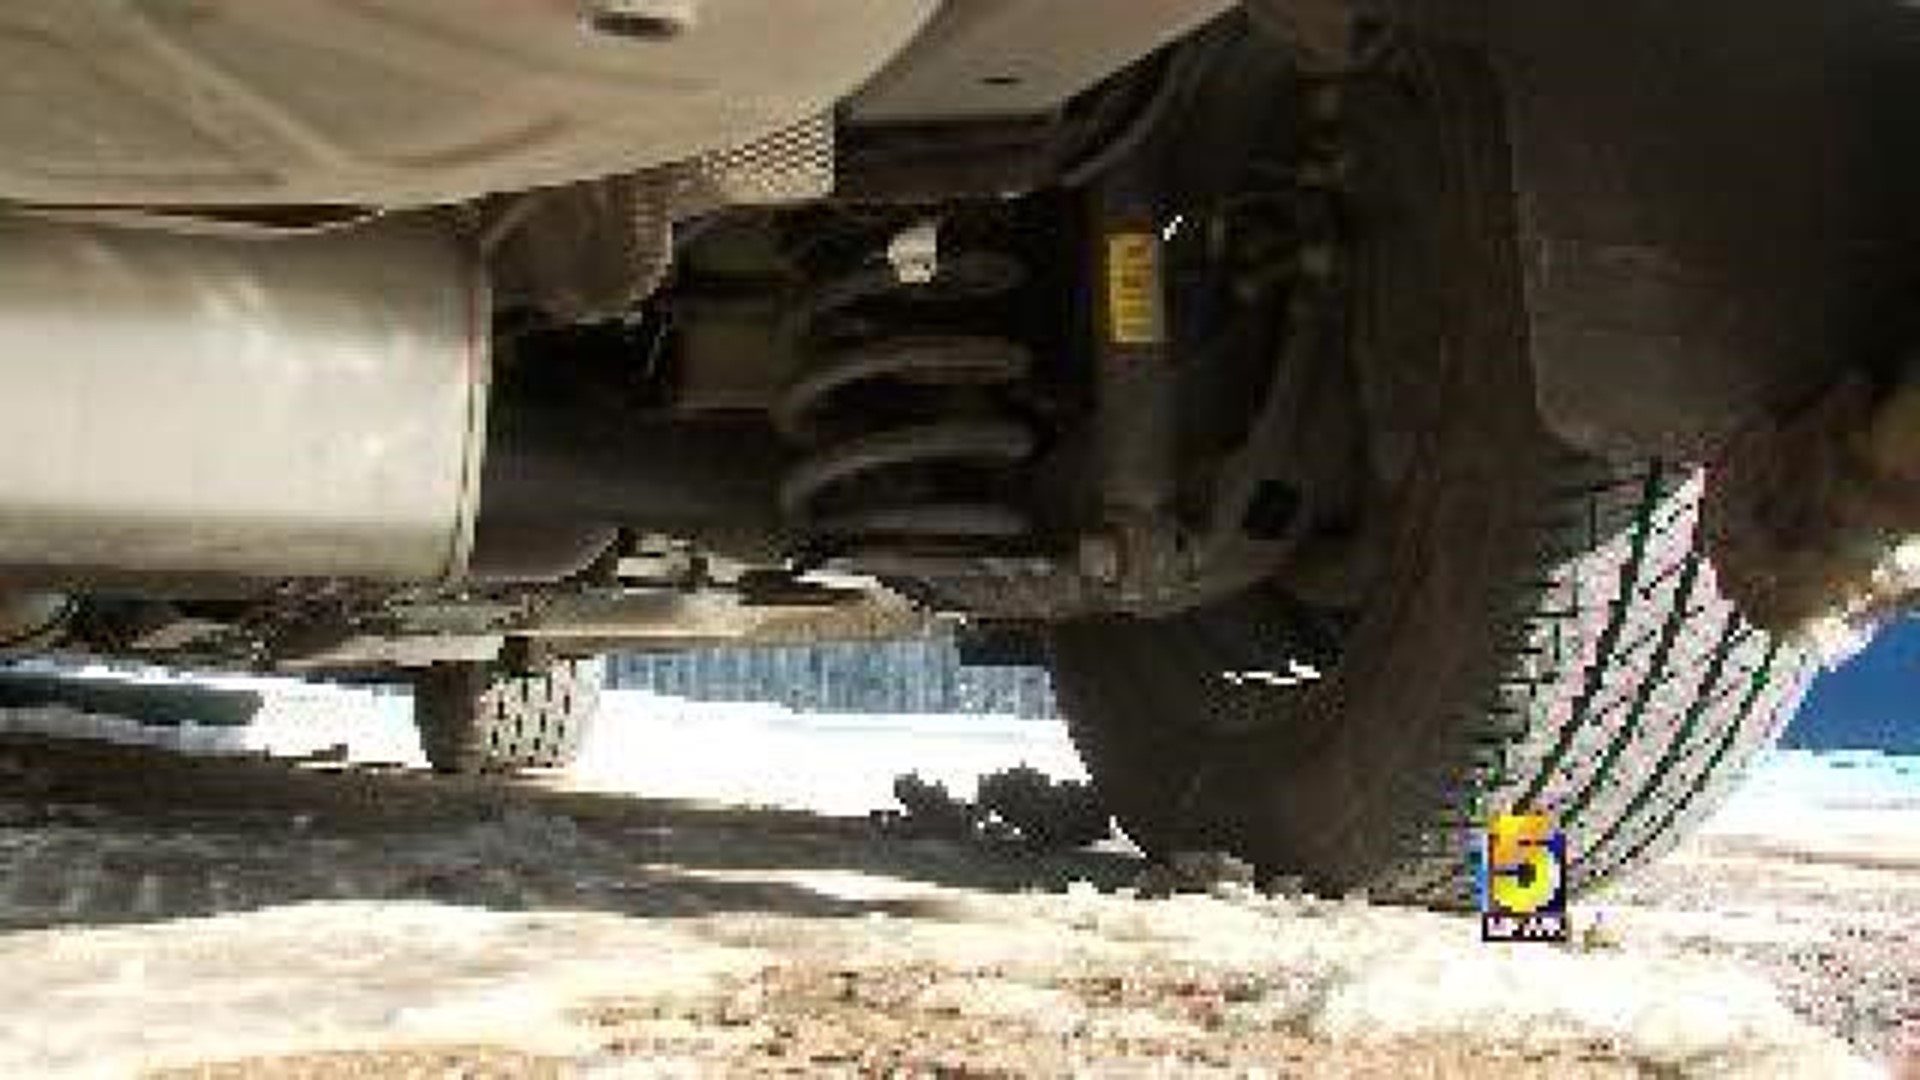 Road Salt Can Damage Cars